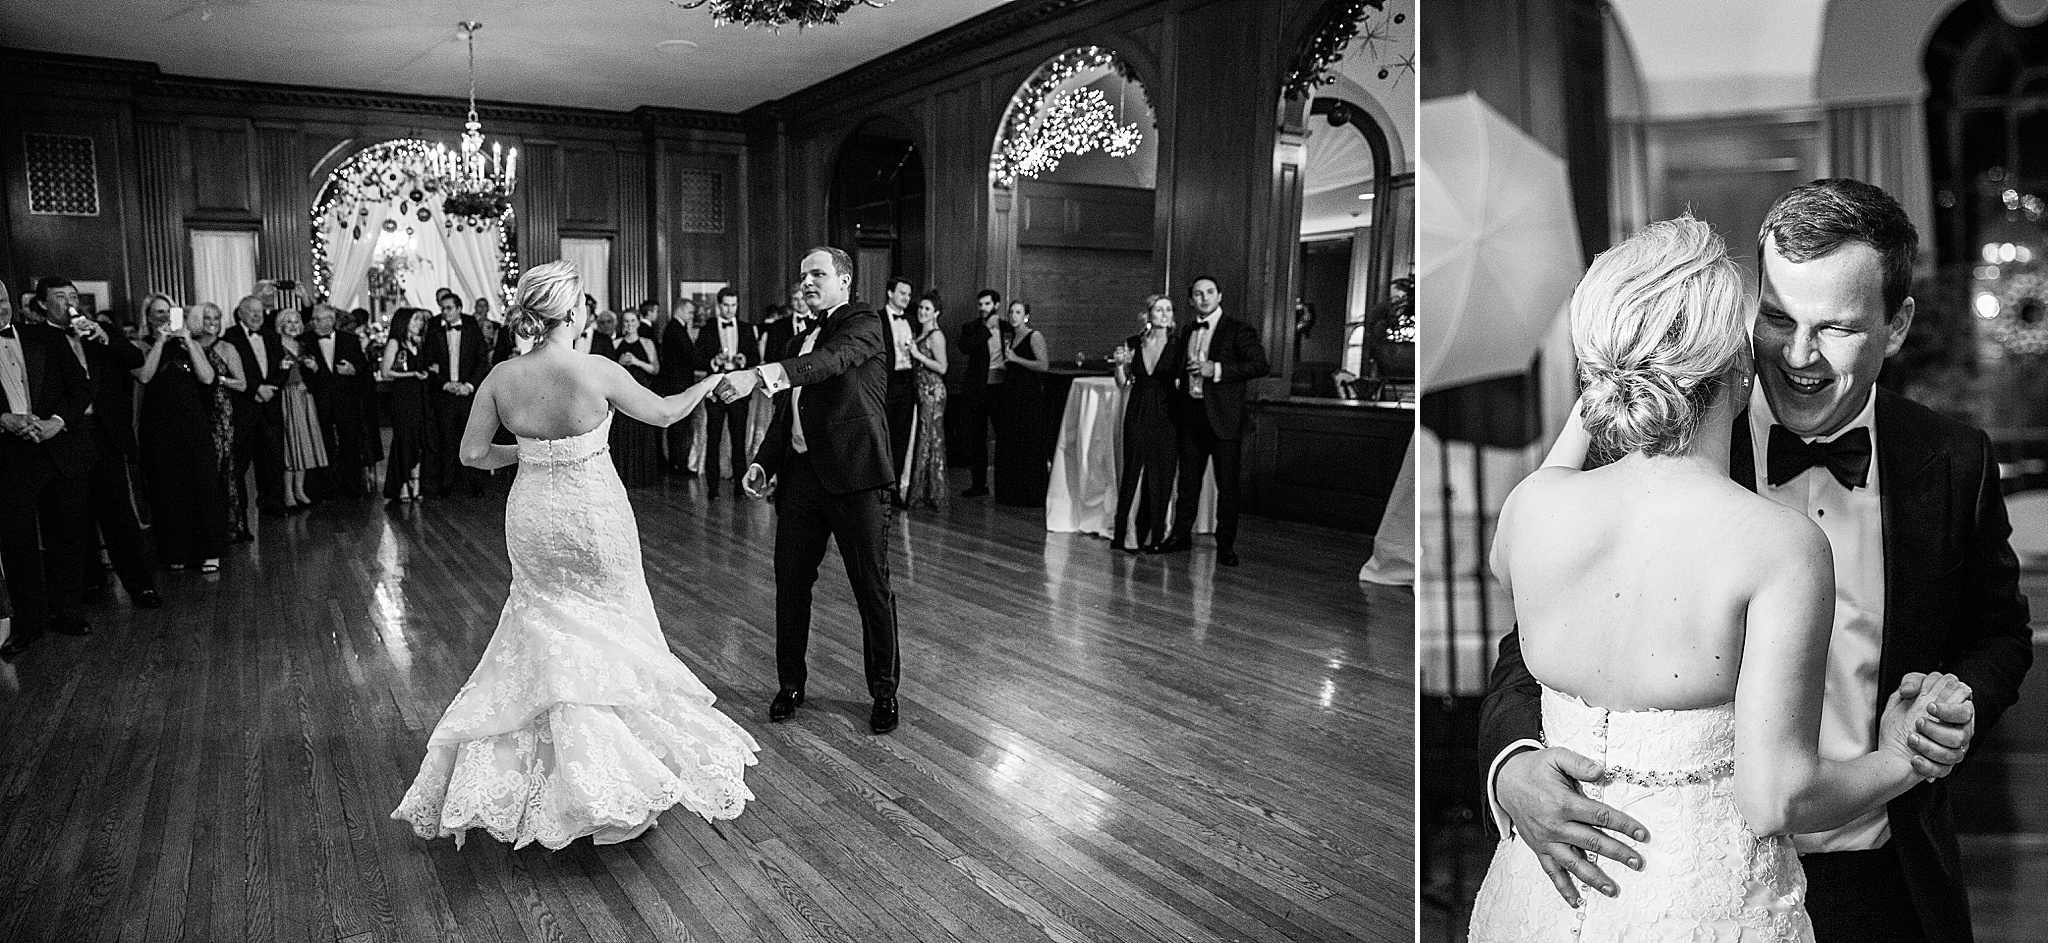 Alexandra Mandato Photography photographs reception dances